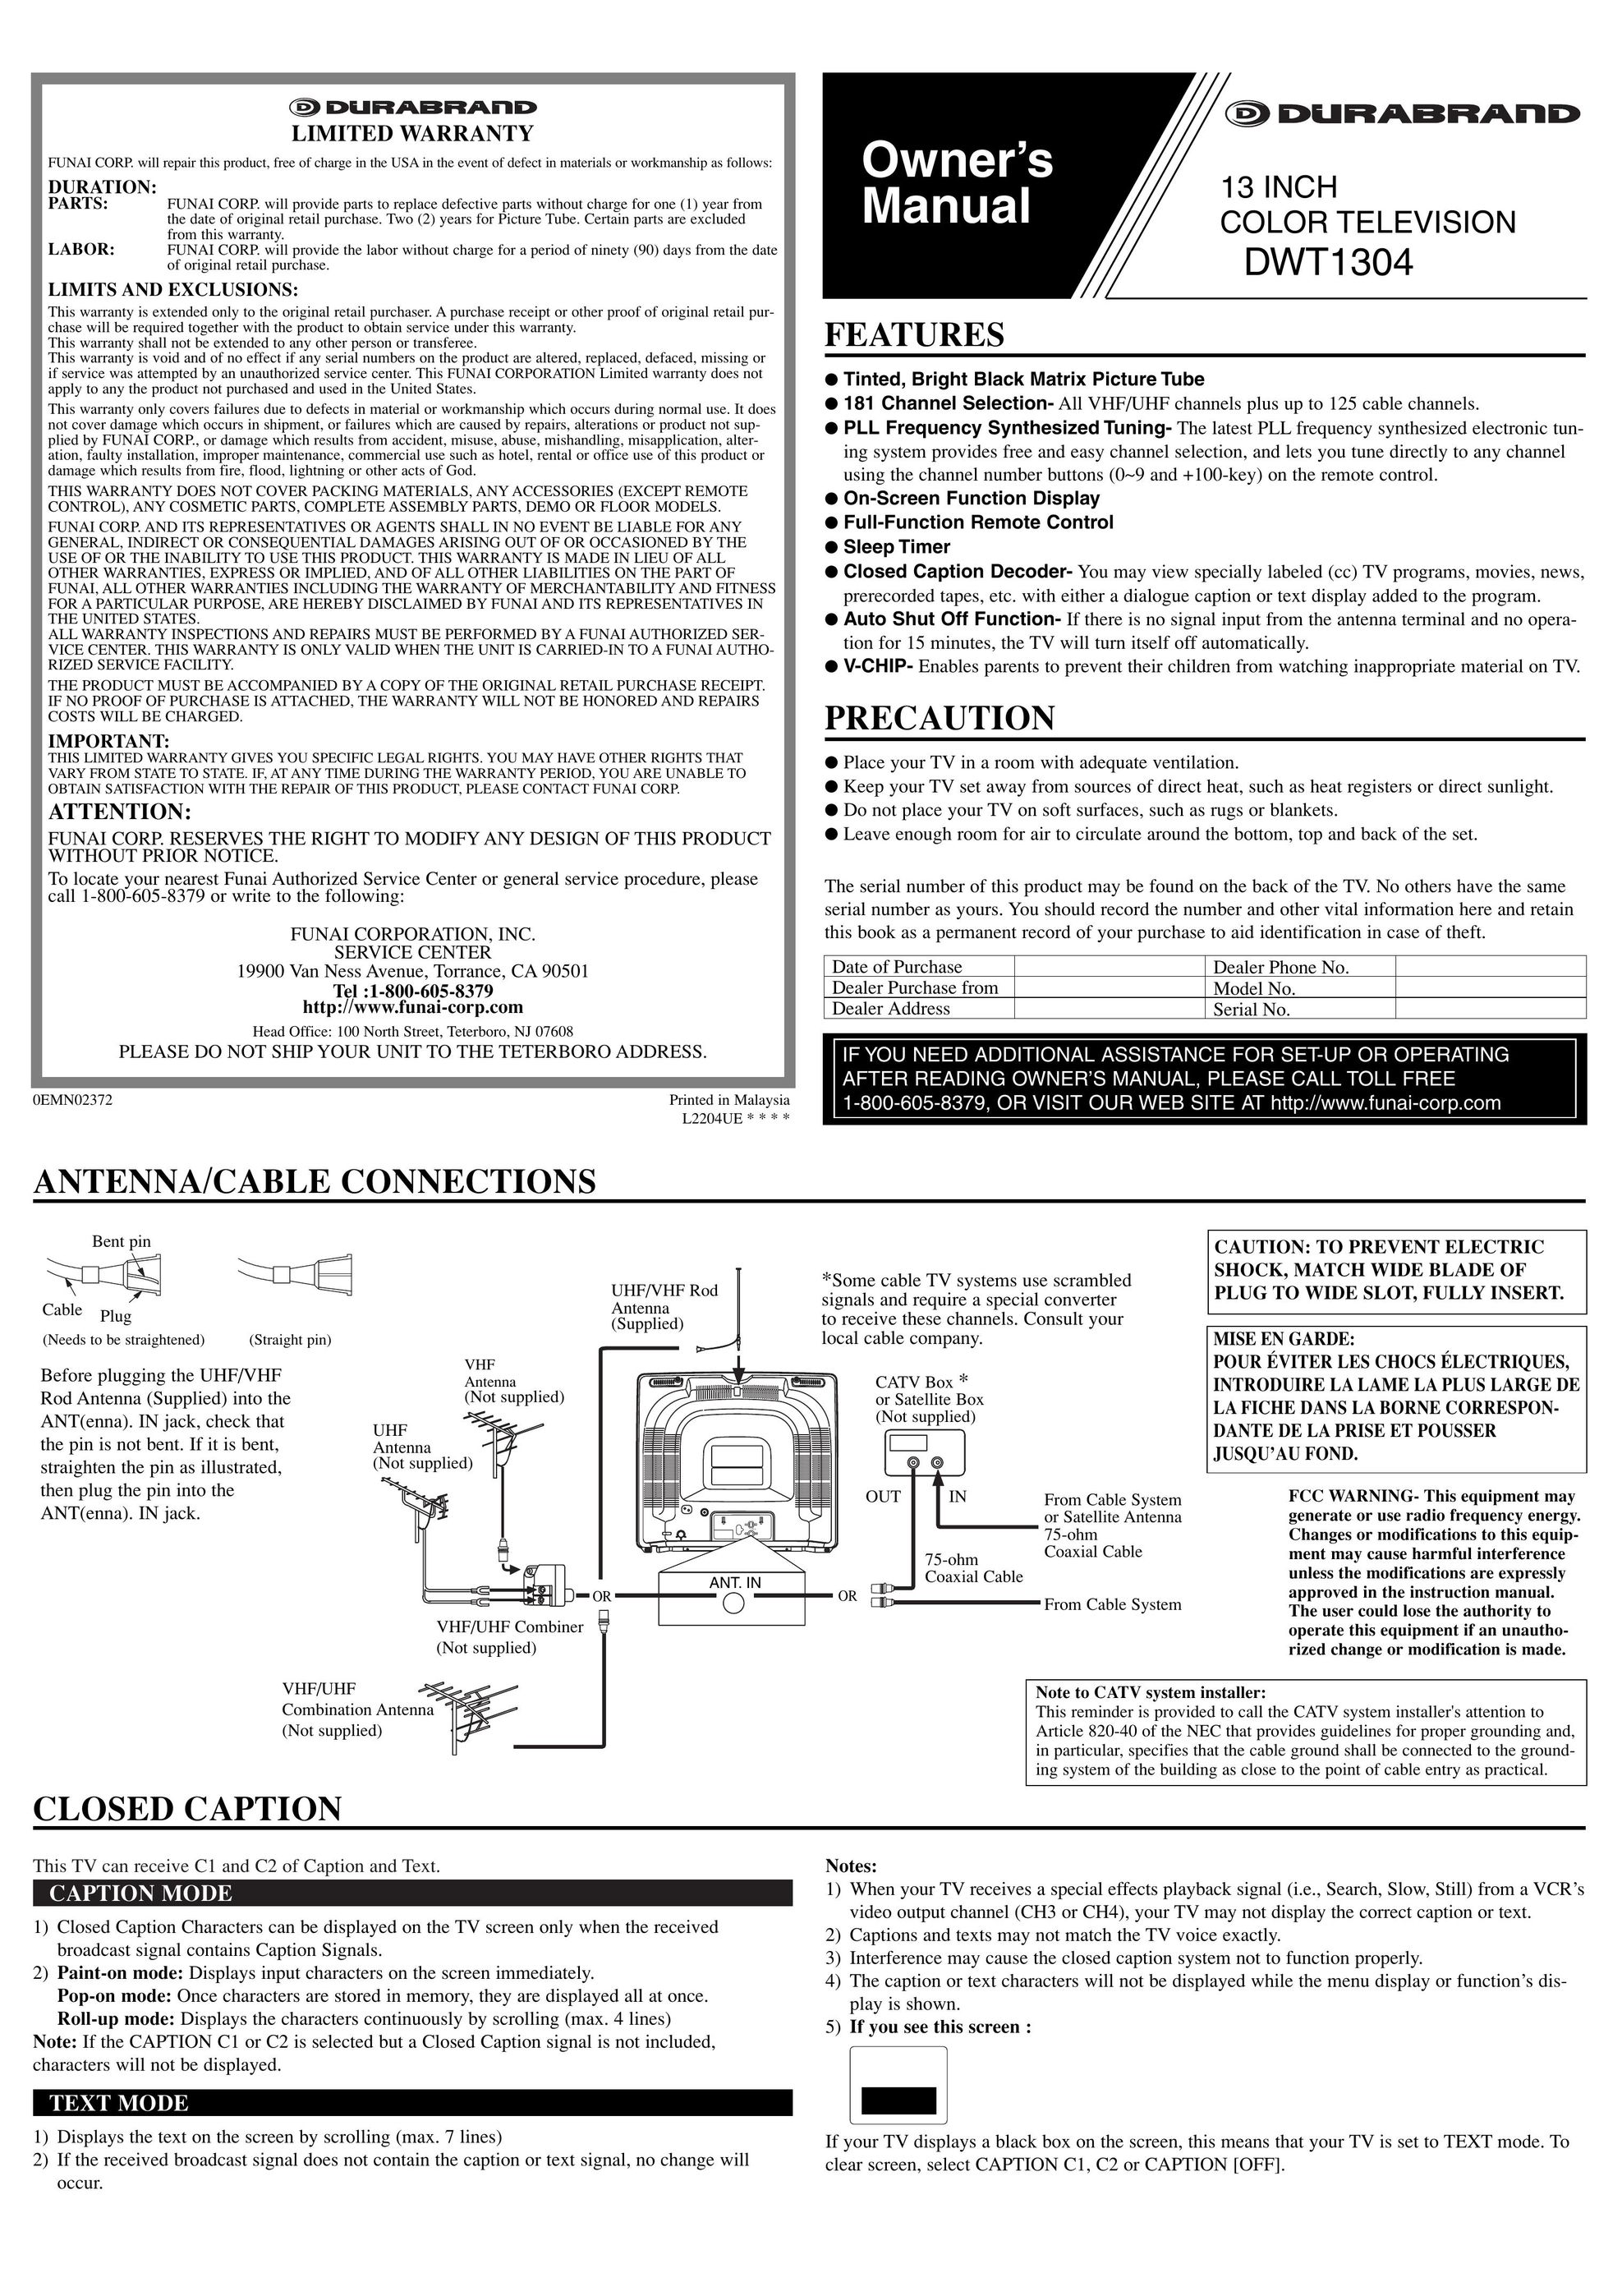 FUNAI DWT1304 CRT Television User Manual